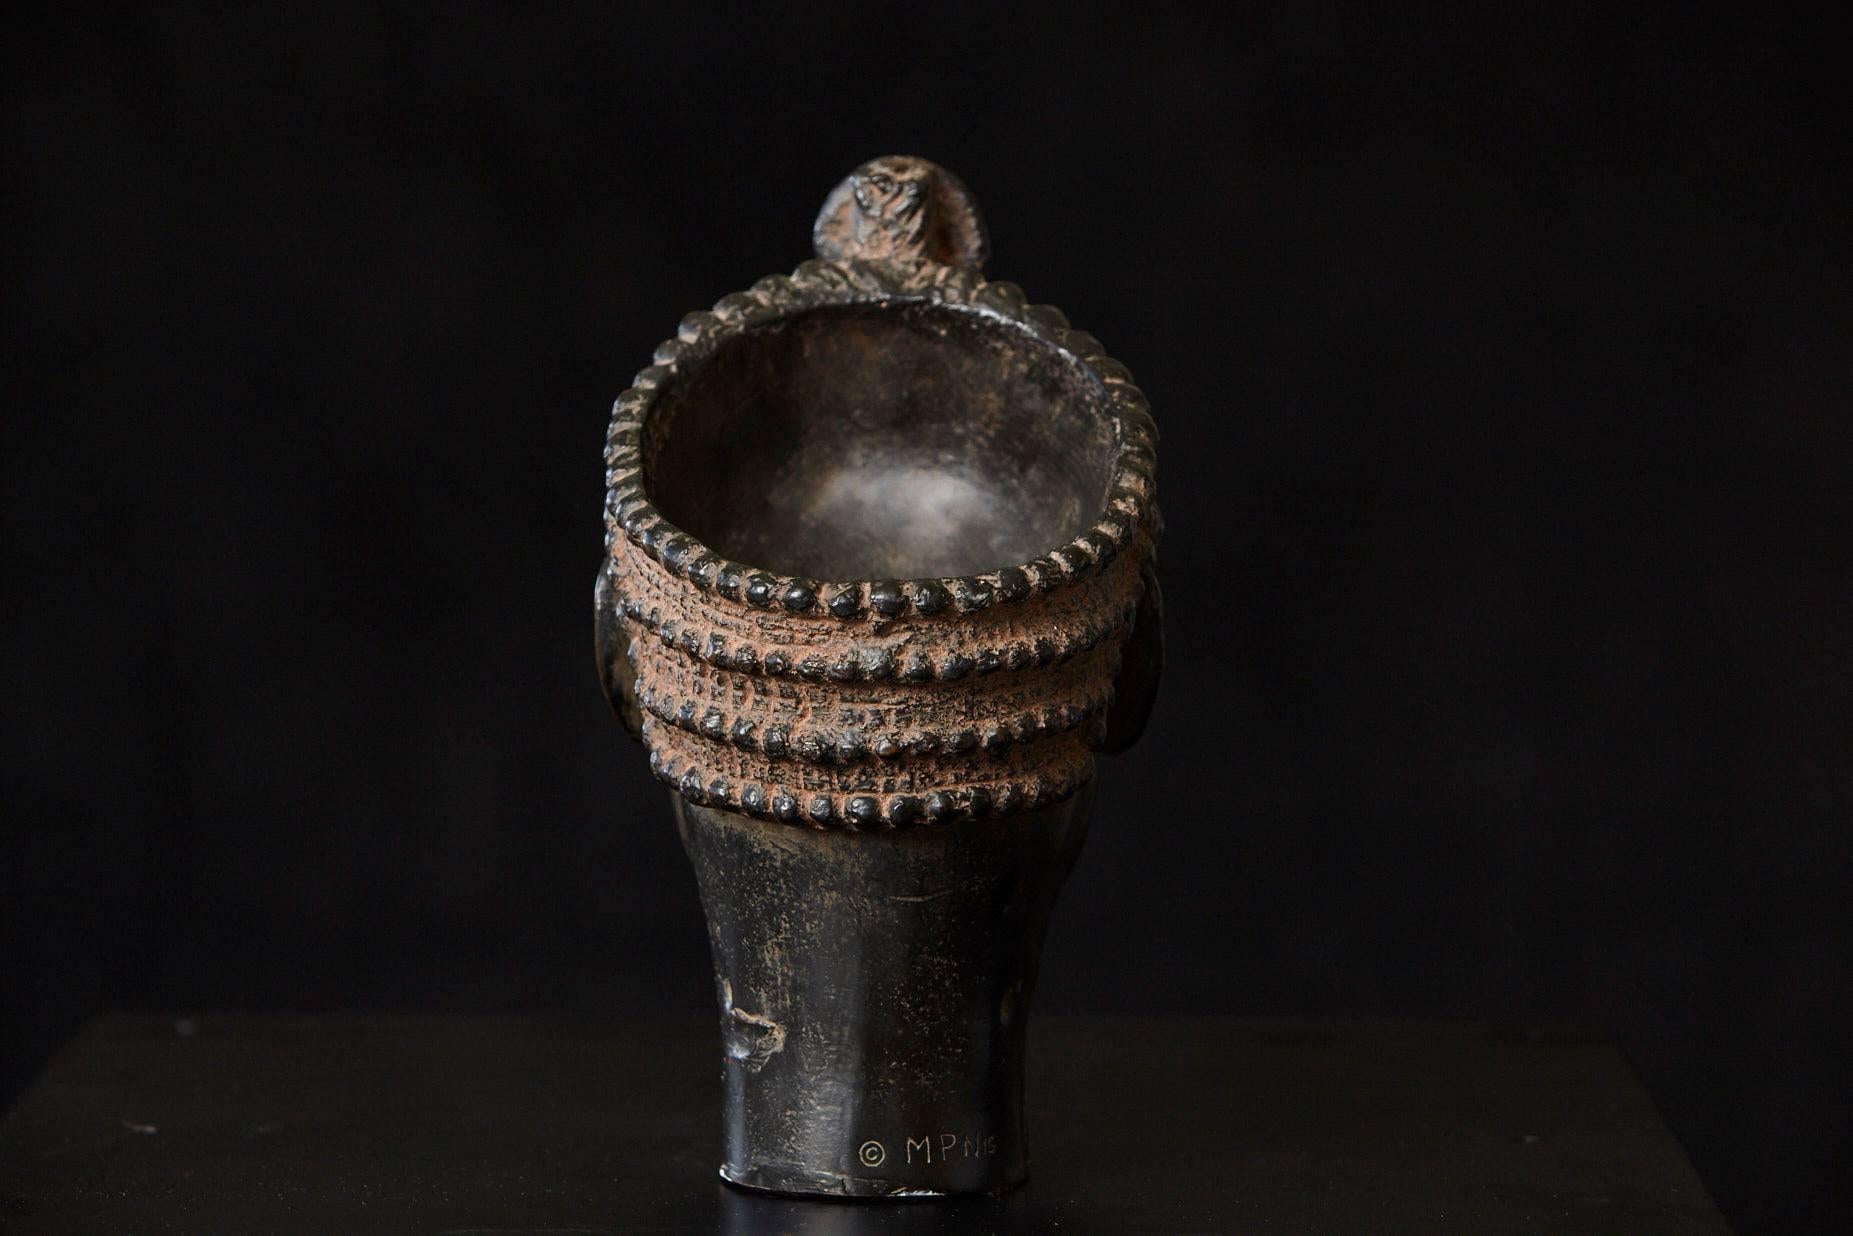 Tribal Ceramic Replica of a Head with Crown, Ancient Kingdom of Ife, Nigeria